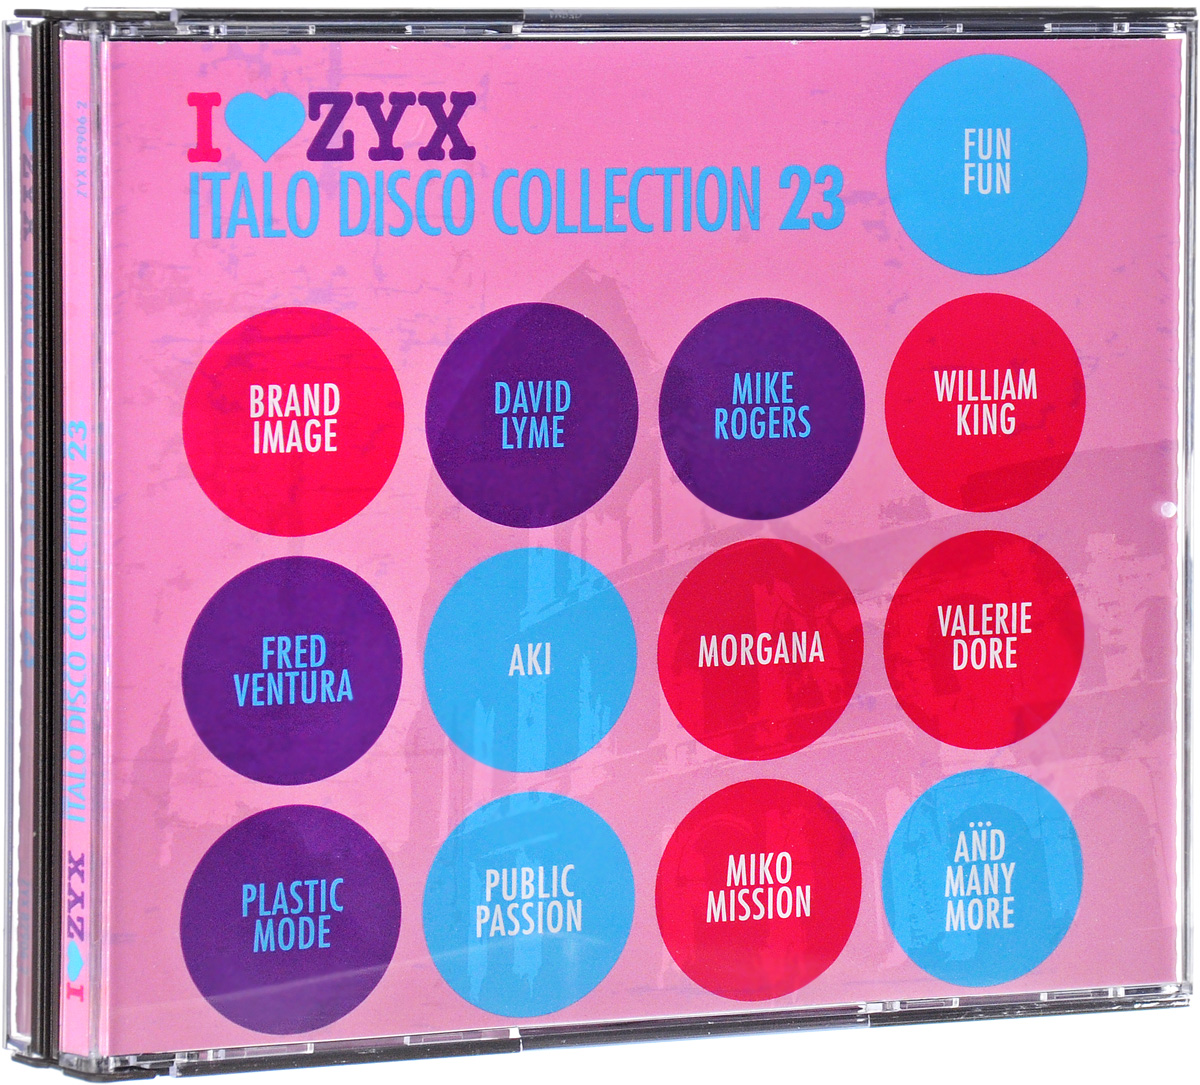 Zyx italo disco new generation 24. I Love ZYX Italo Disco collection 24. I Love ZYX Italo Disco collection 23. Italo Disco collection Vol 23. Italo Disco Generation.